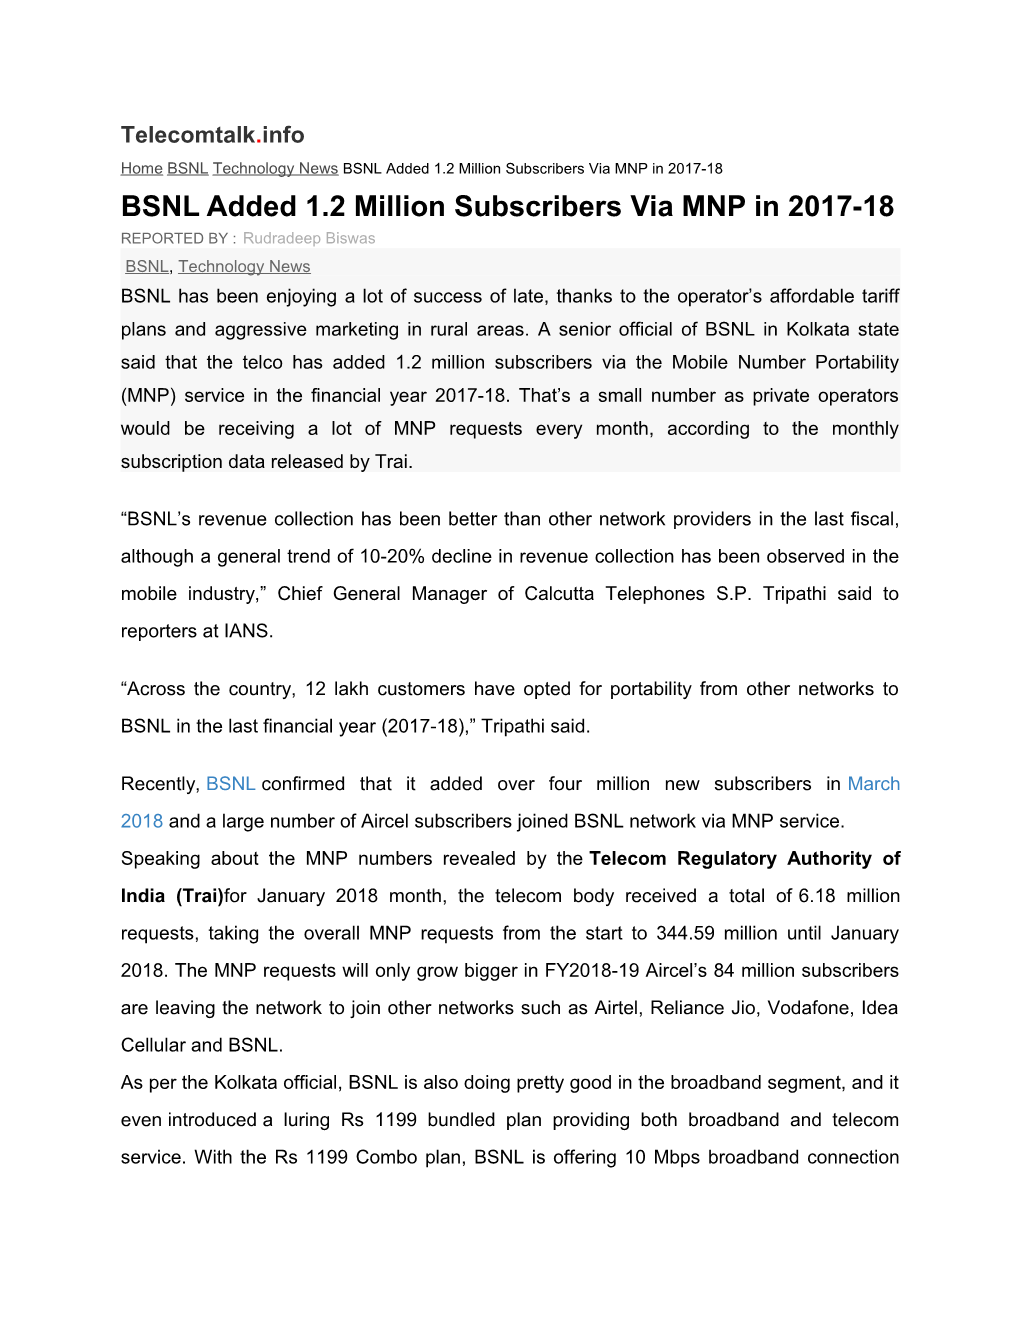 BSNL Added 1.2 Million Subscribers Via MNP in 2017-18